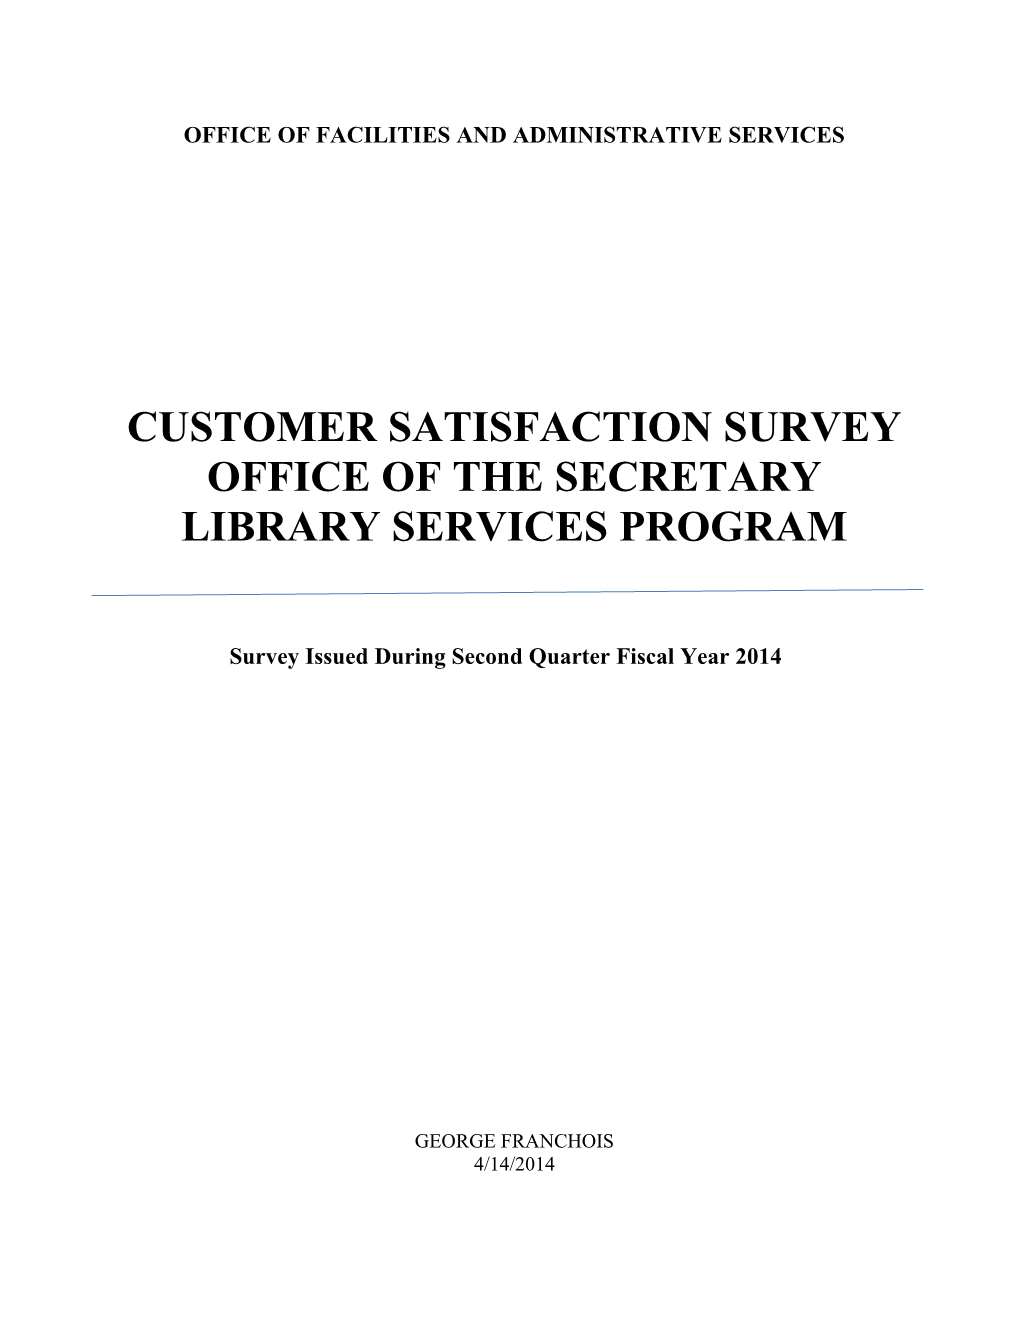 Customer Satisfaction Survey of the Health Unit